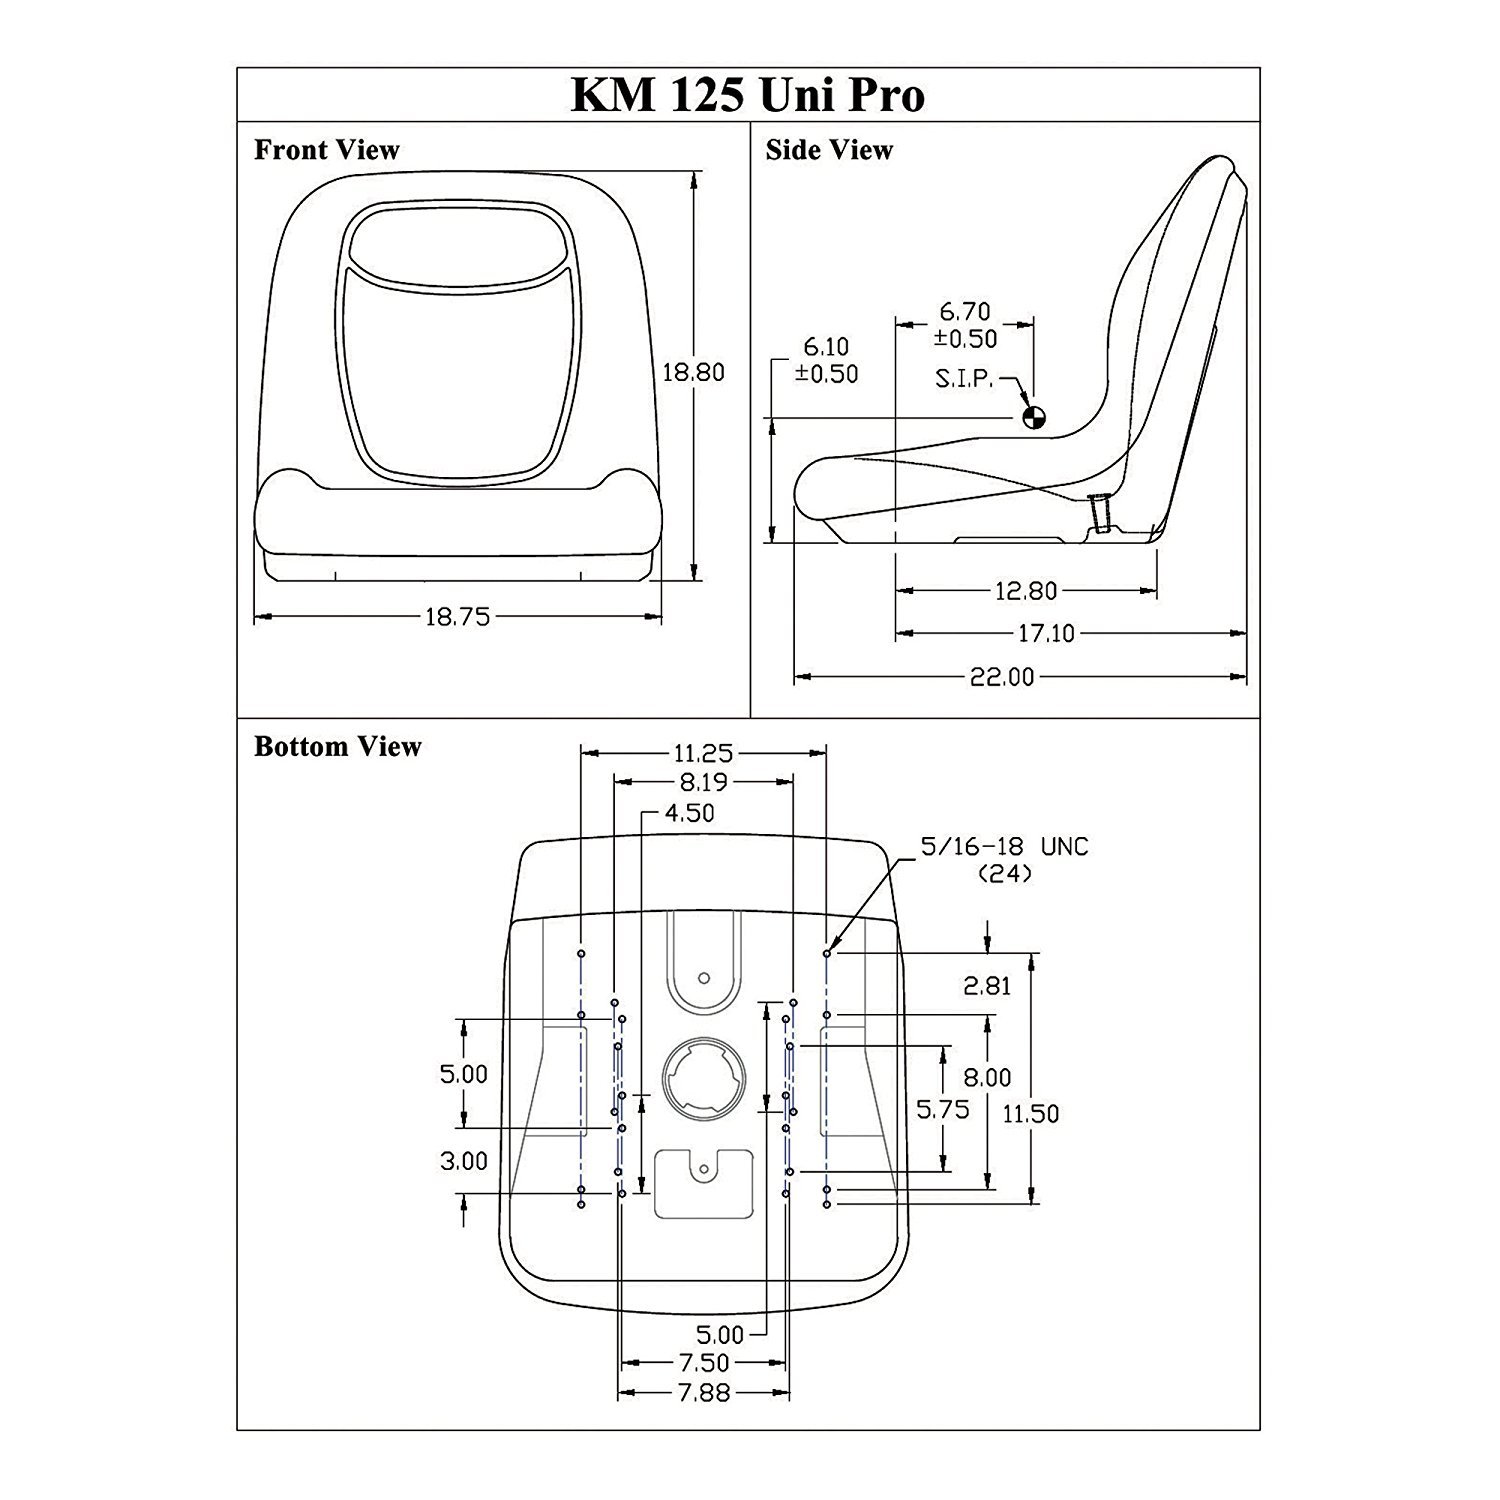 ls160 wiring diagram